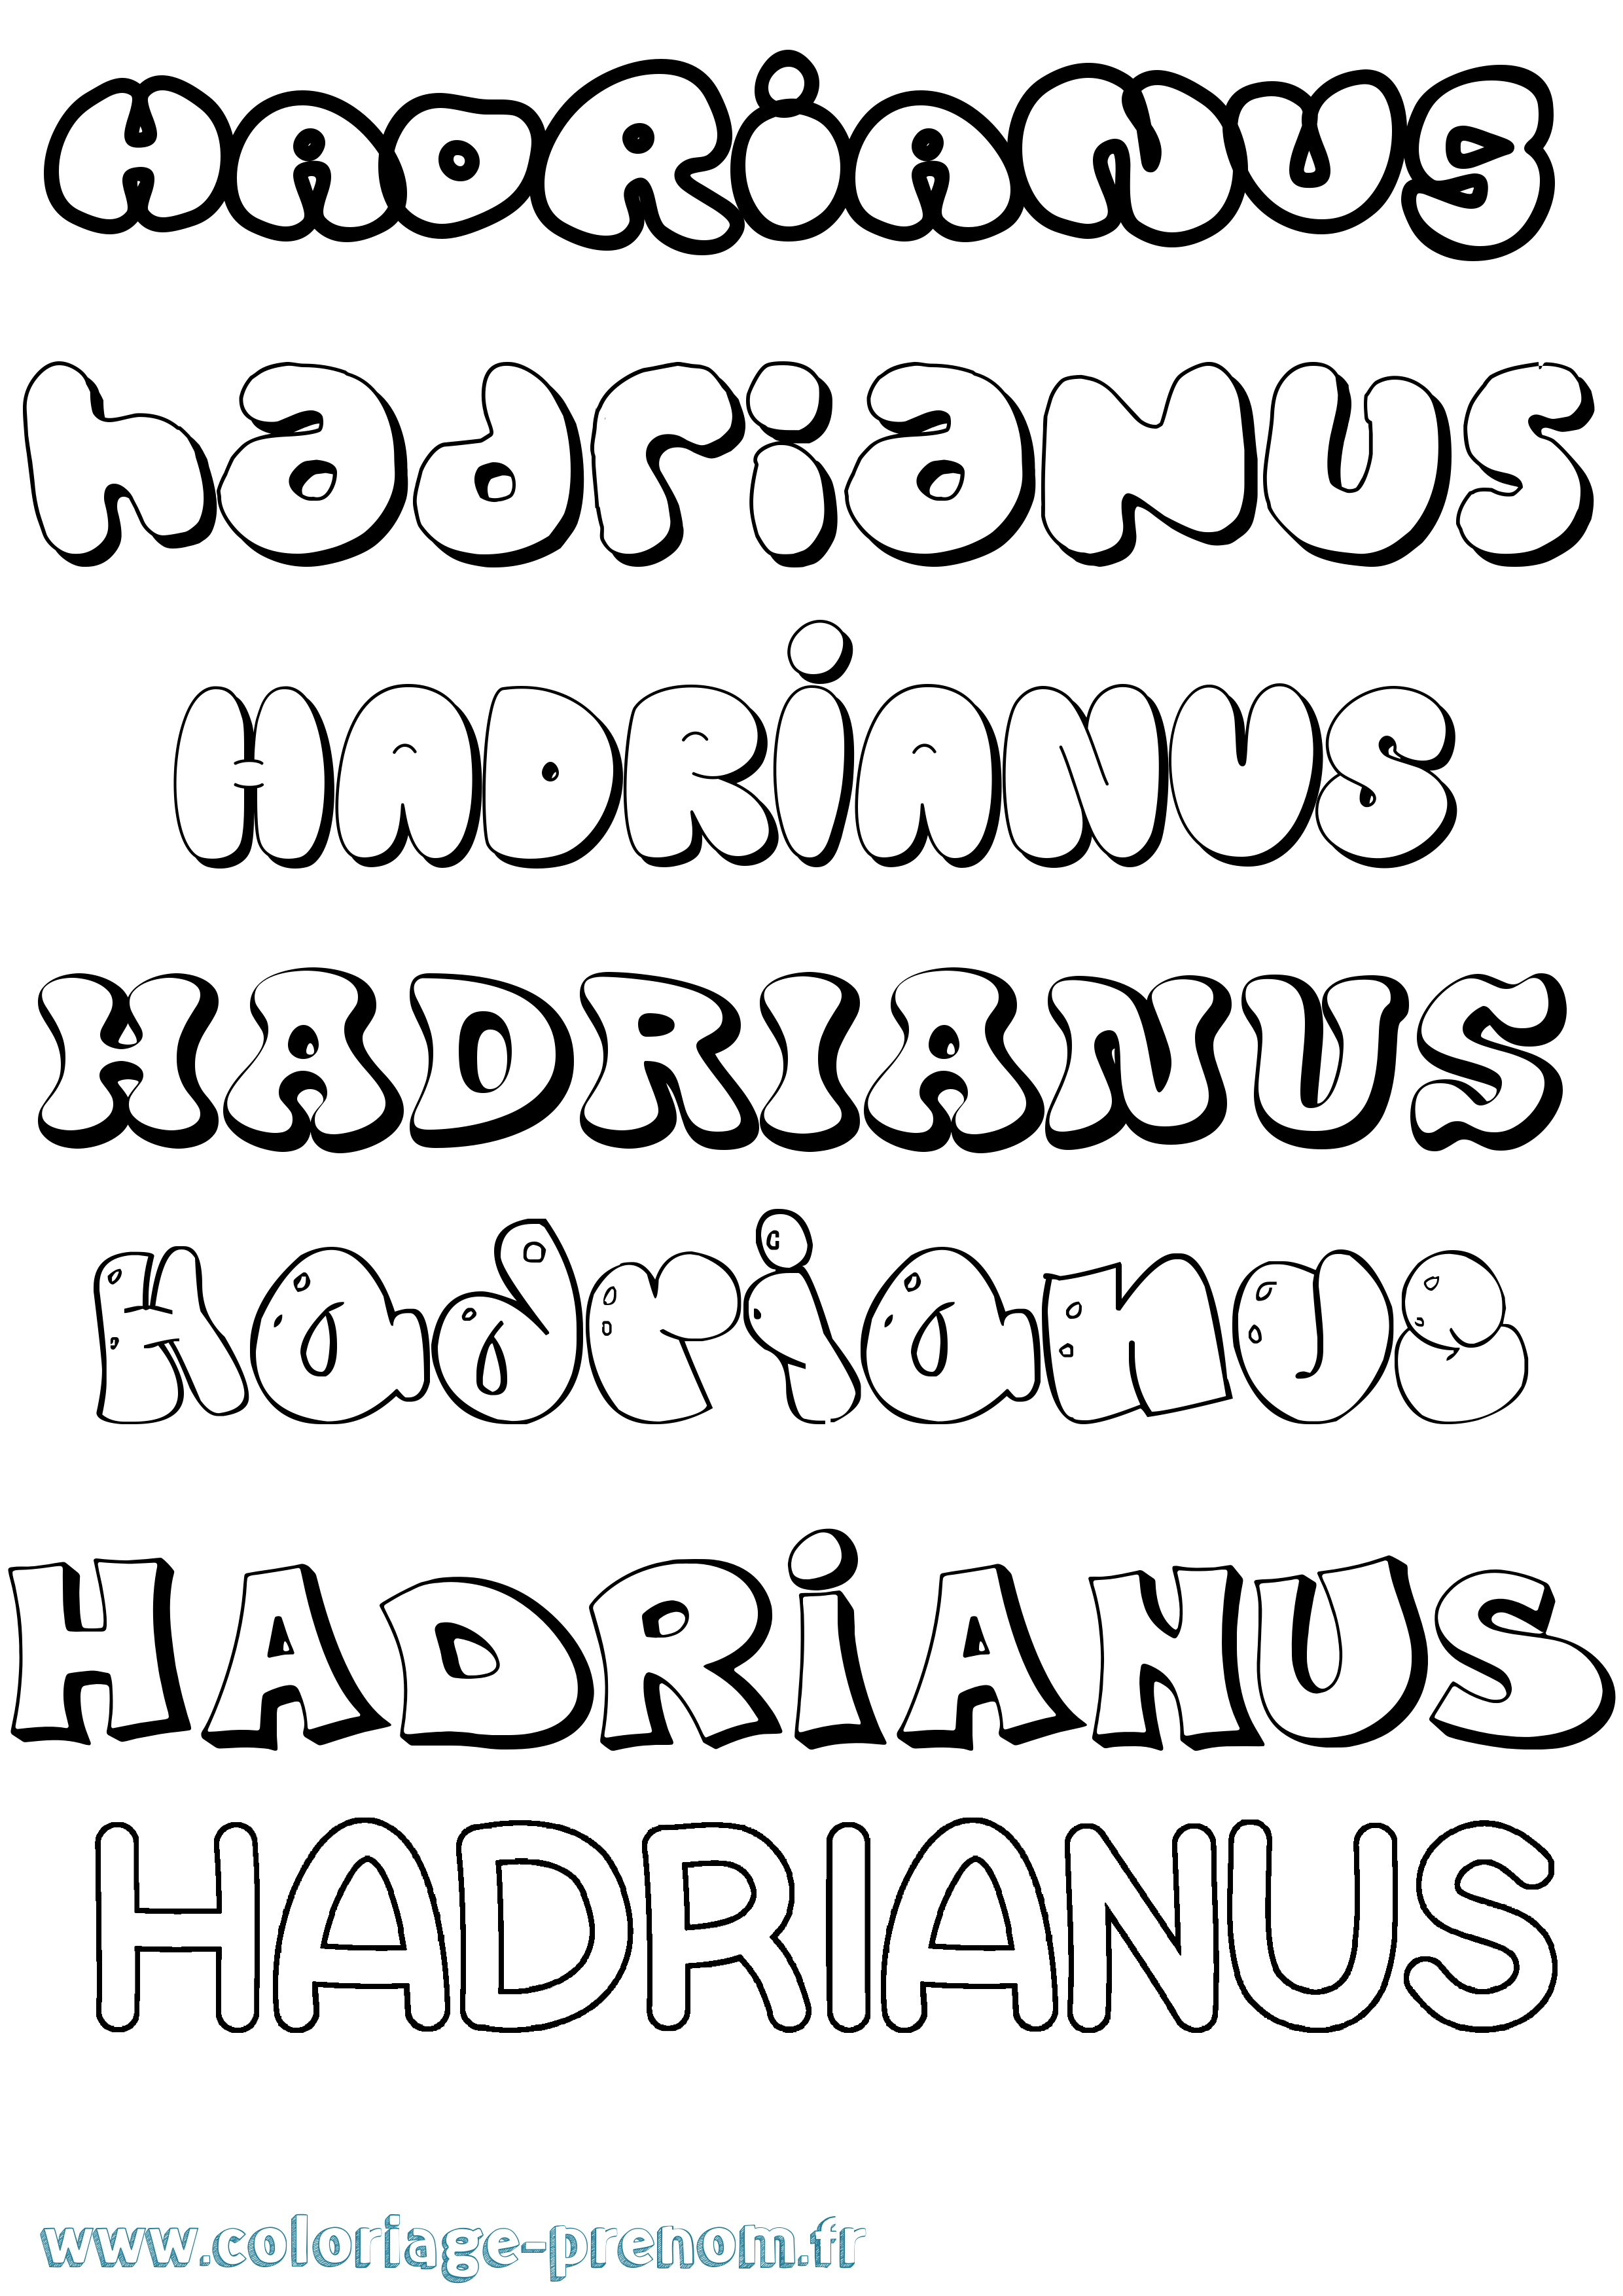 Coloriage prénom Hadrianus Bubble